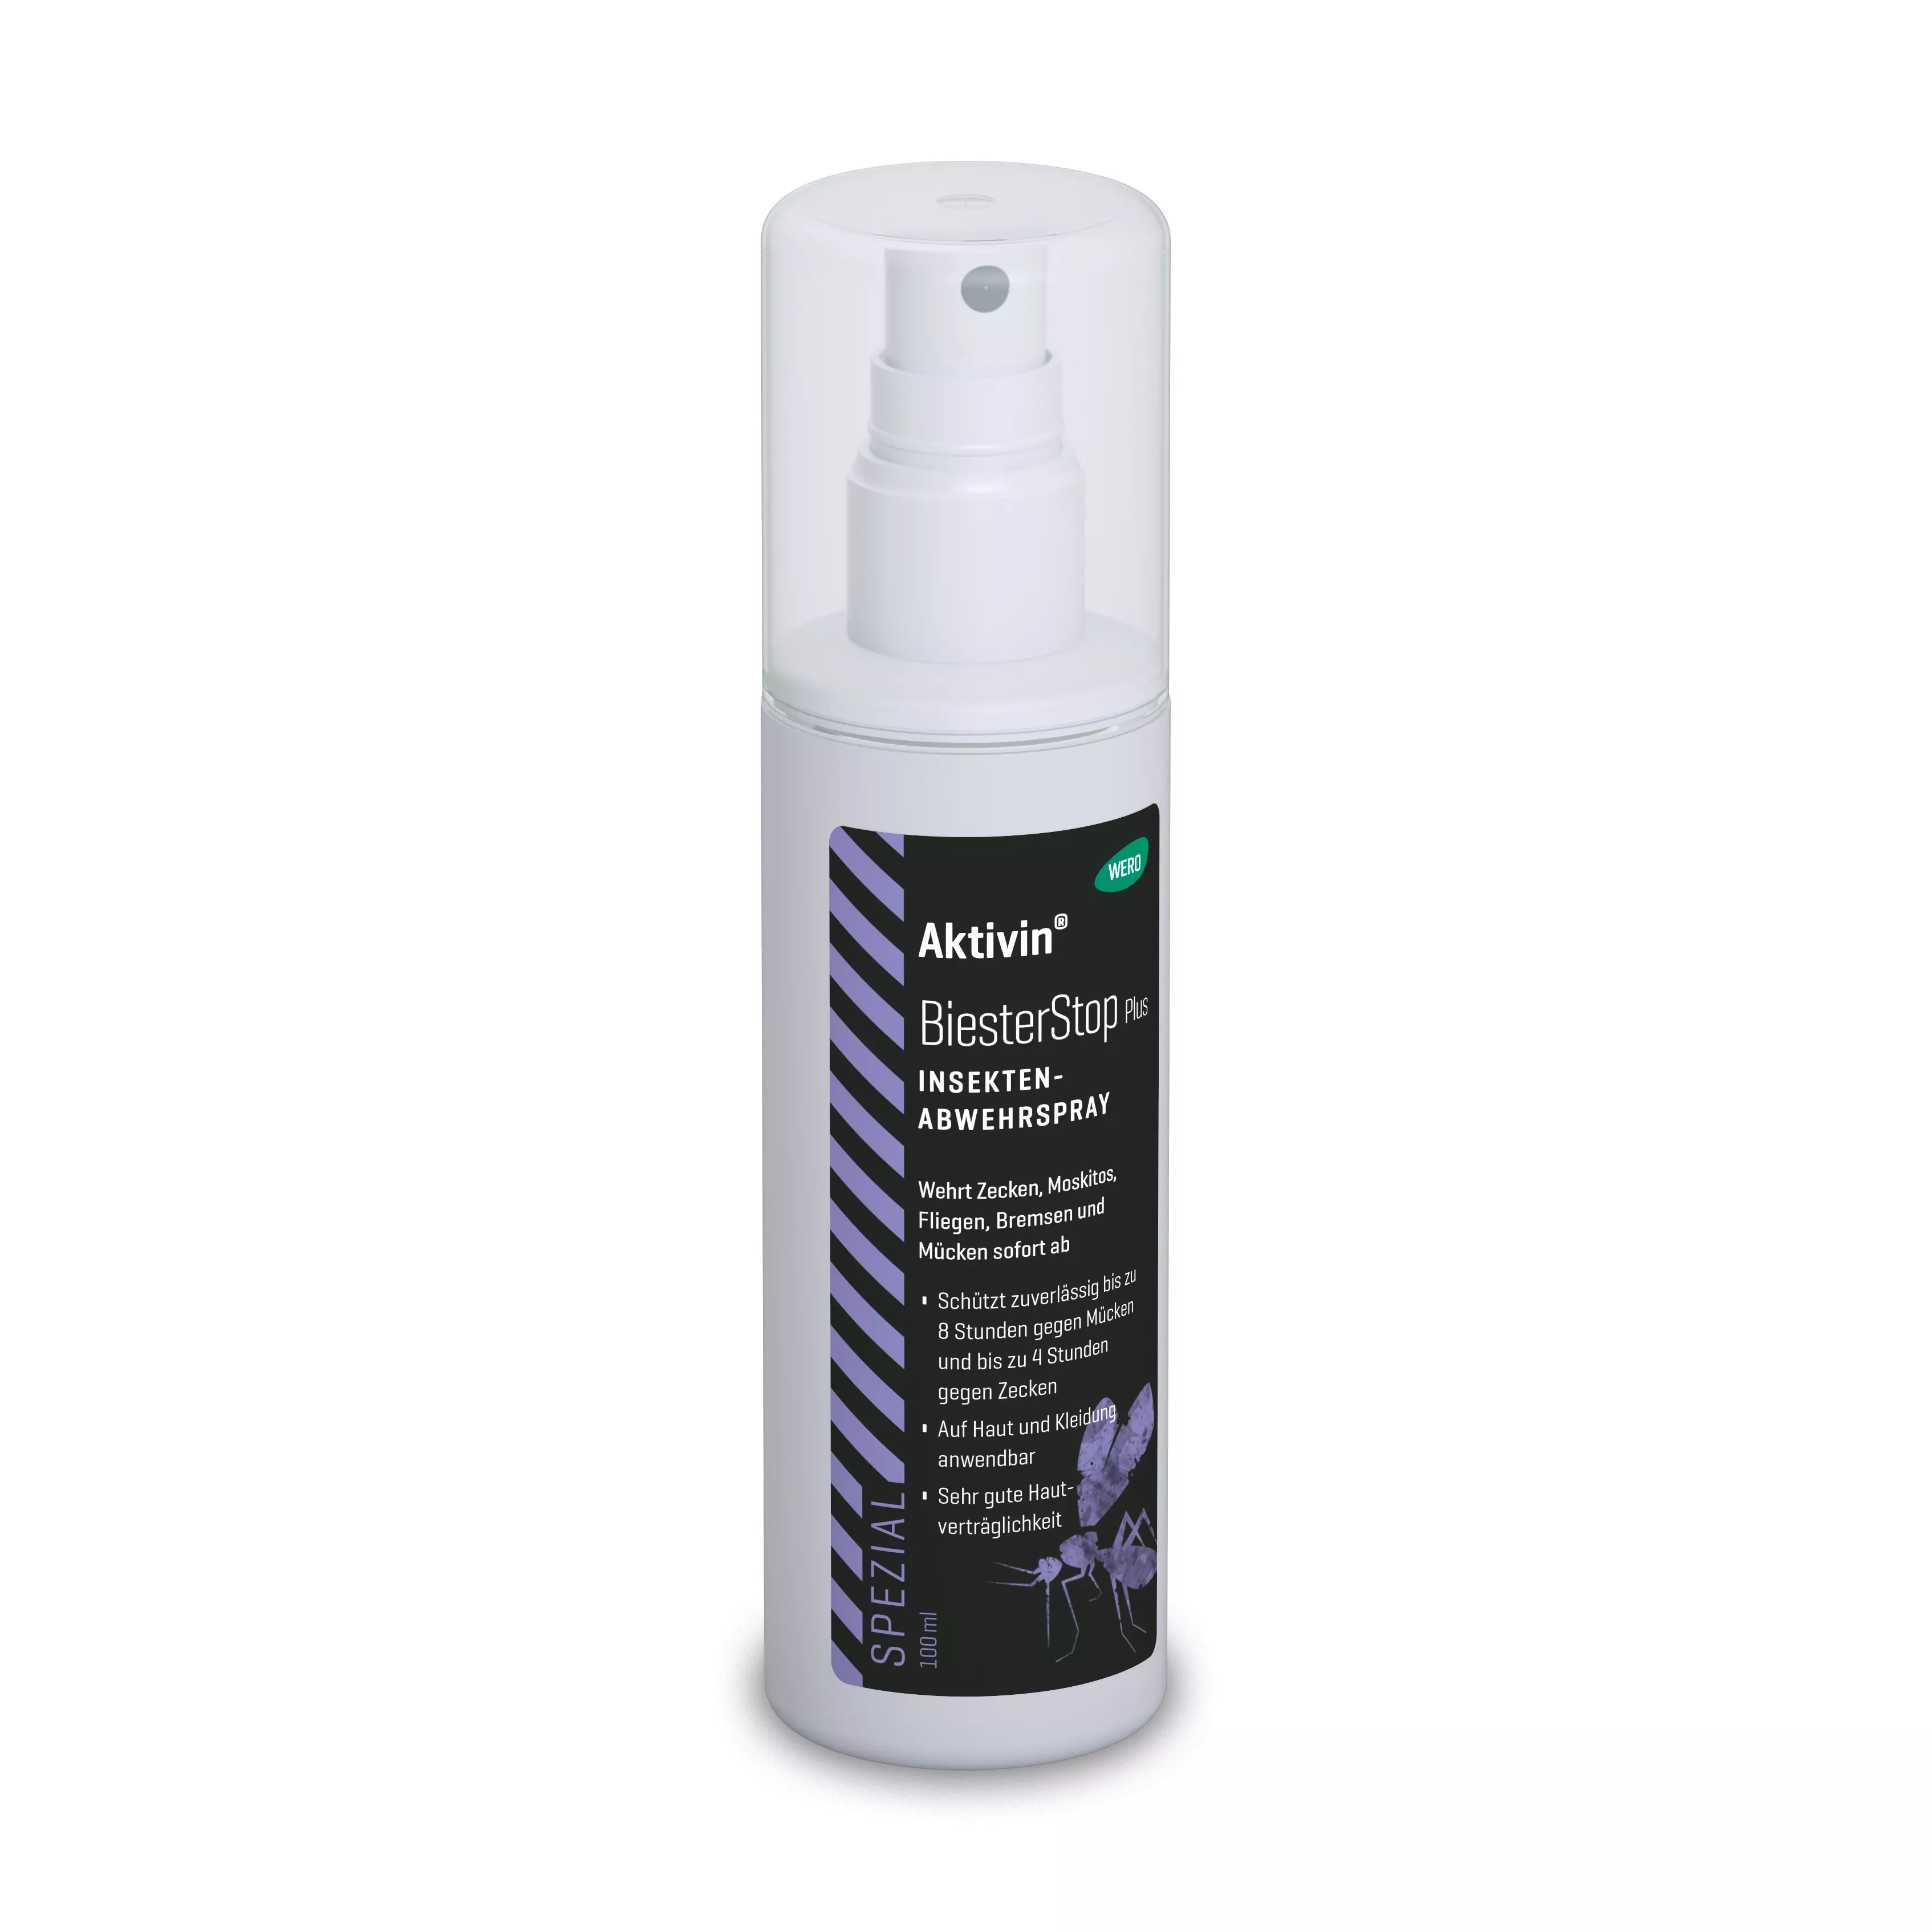 Insektenabwehrspray Aktivin® BiesterStop Plus, 100 ml